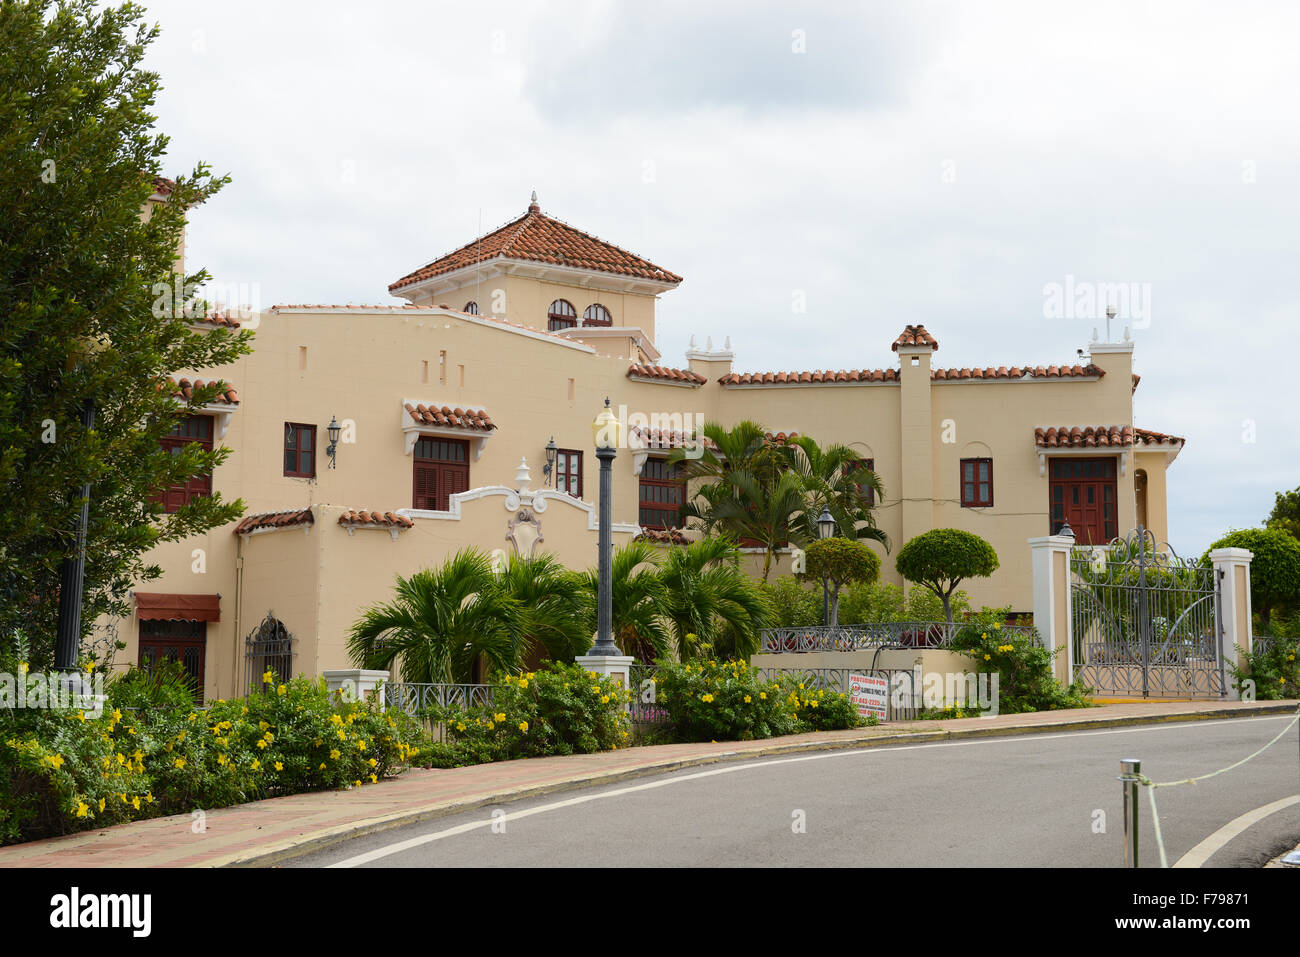 Rückansicht des Serralles Schlossmuseums-Gebäudes. Ponce, Puerto Rico. Territorium der USA. Karibik-Insel. Stockfoto